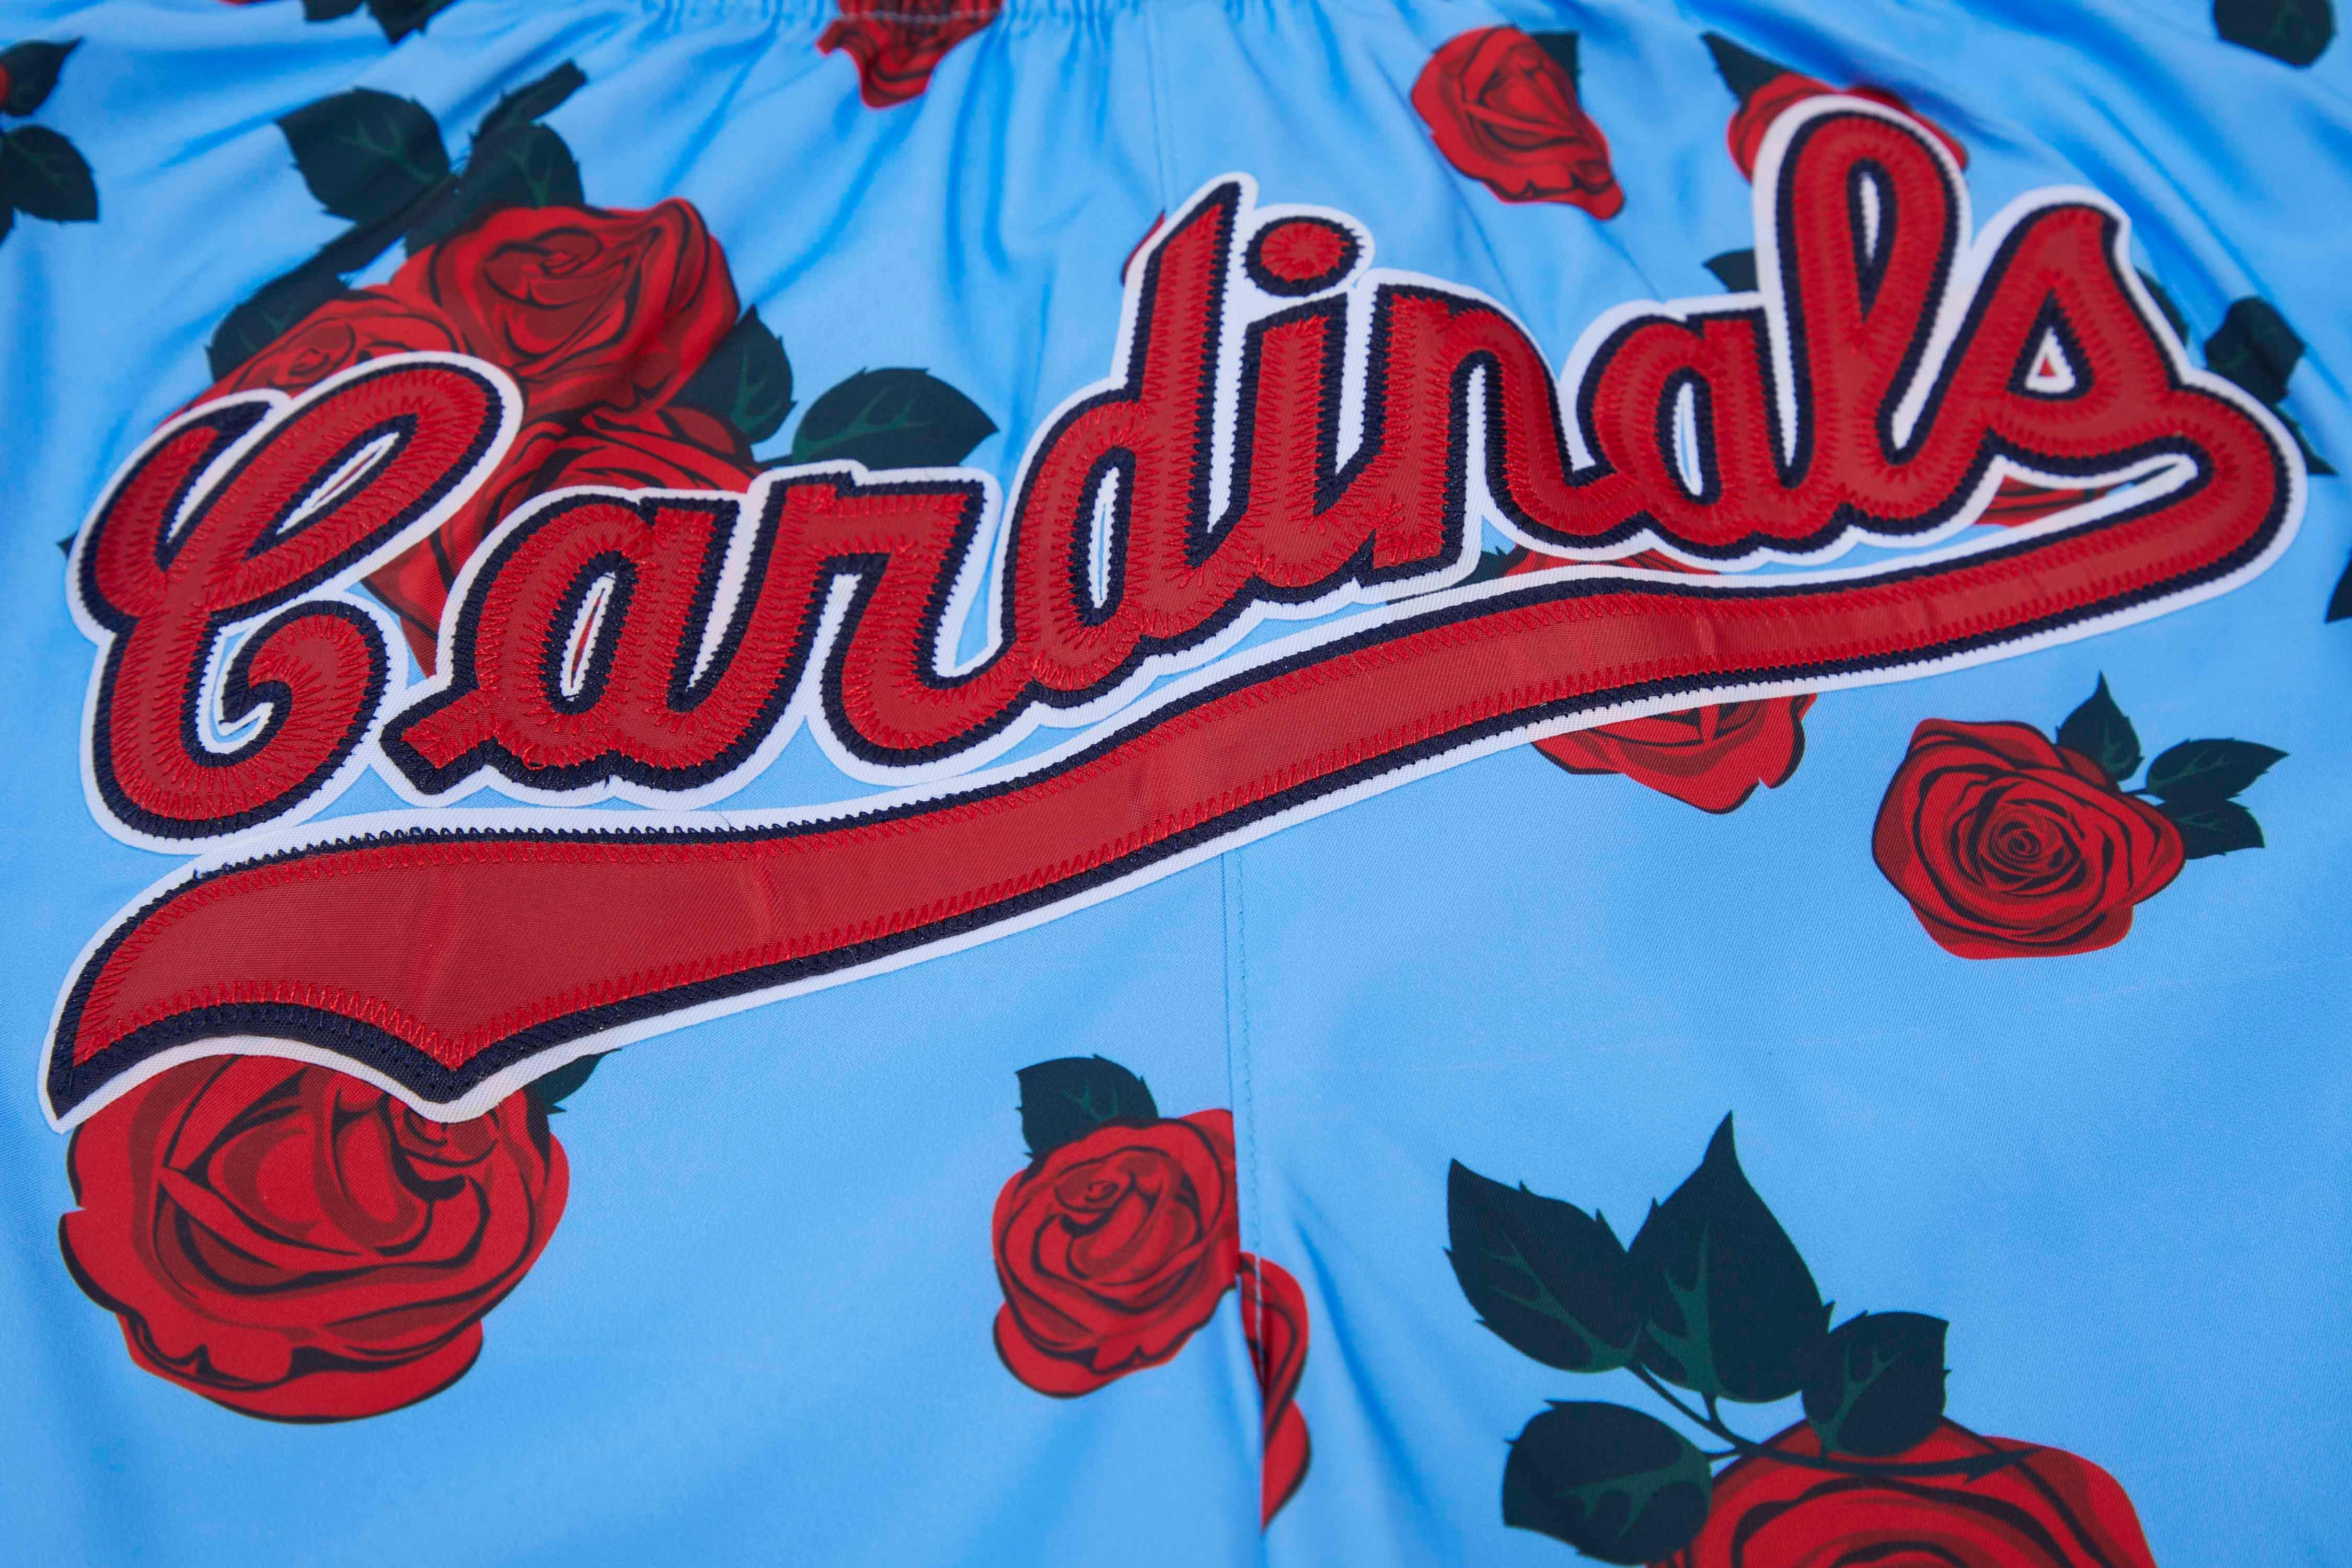 Pro Standard Men's St. Louis Cardinals Roses Shorts - Hibbett